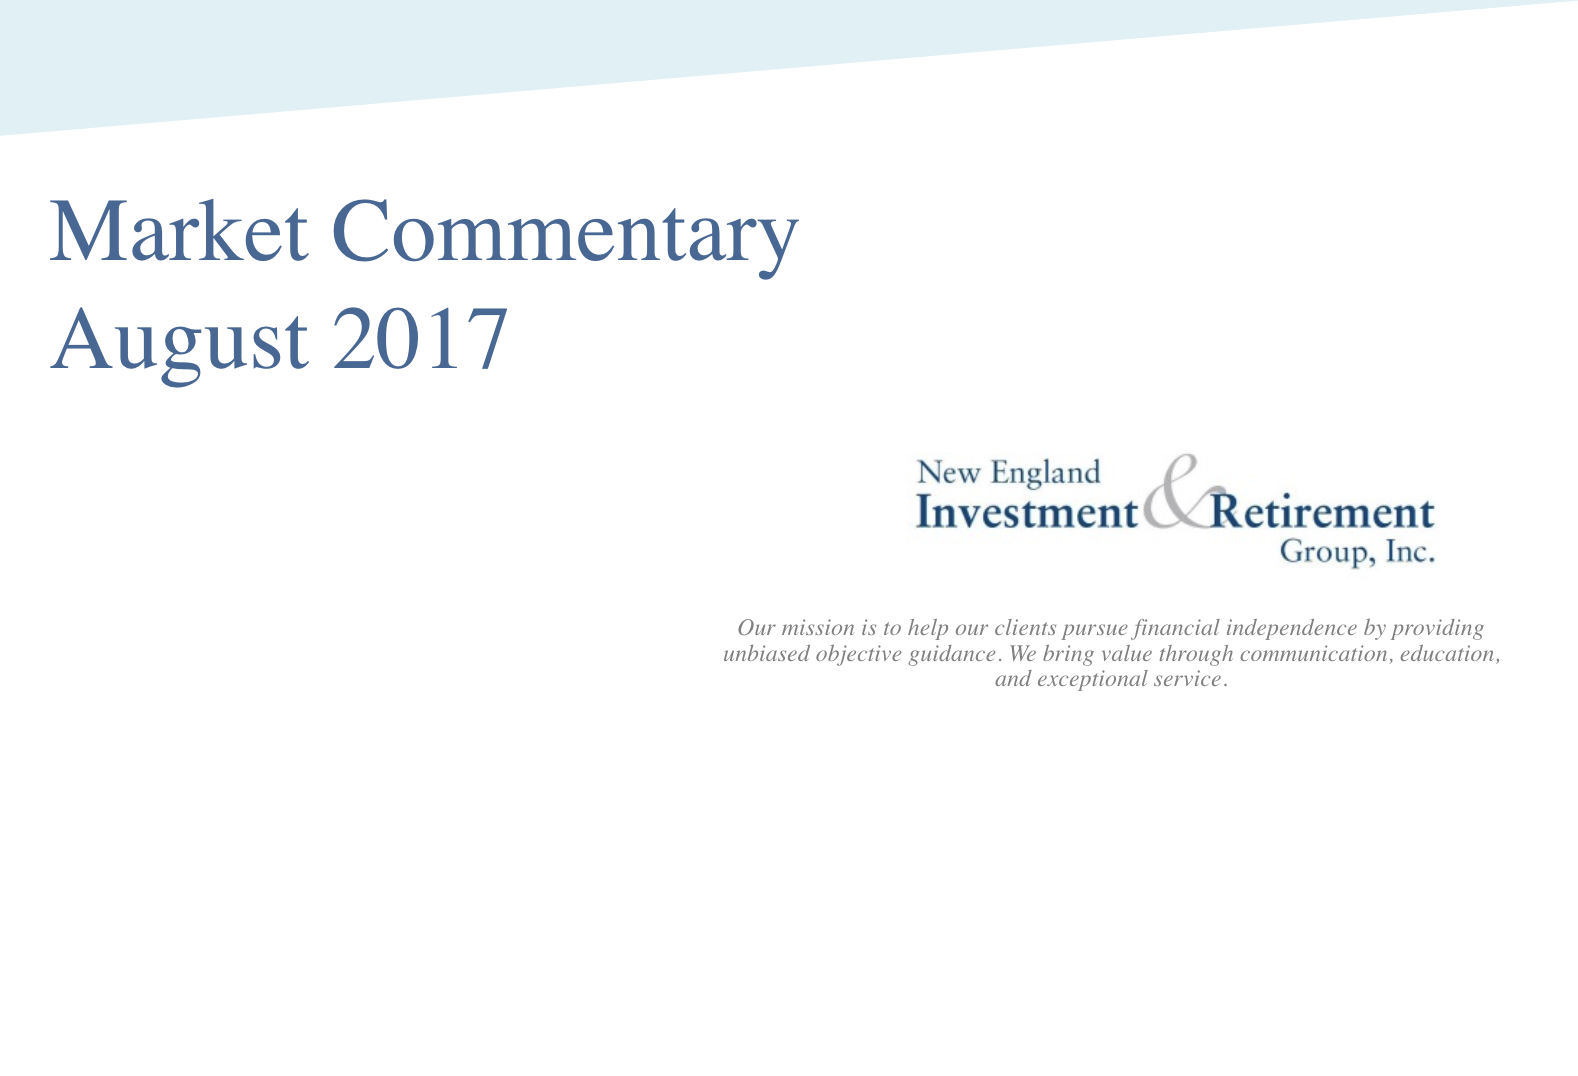 NEIRG Market Commentary August 2017